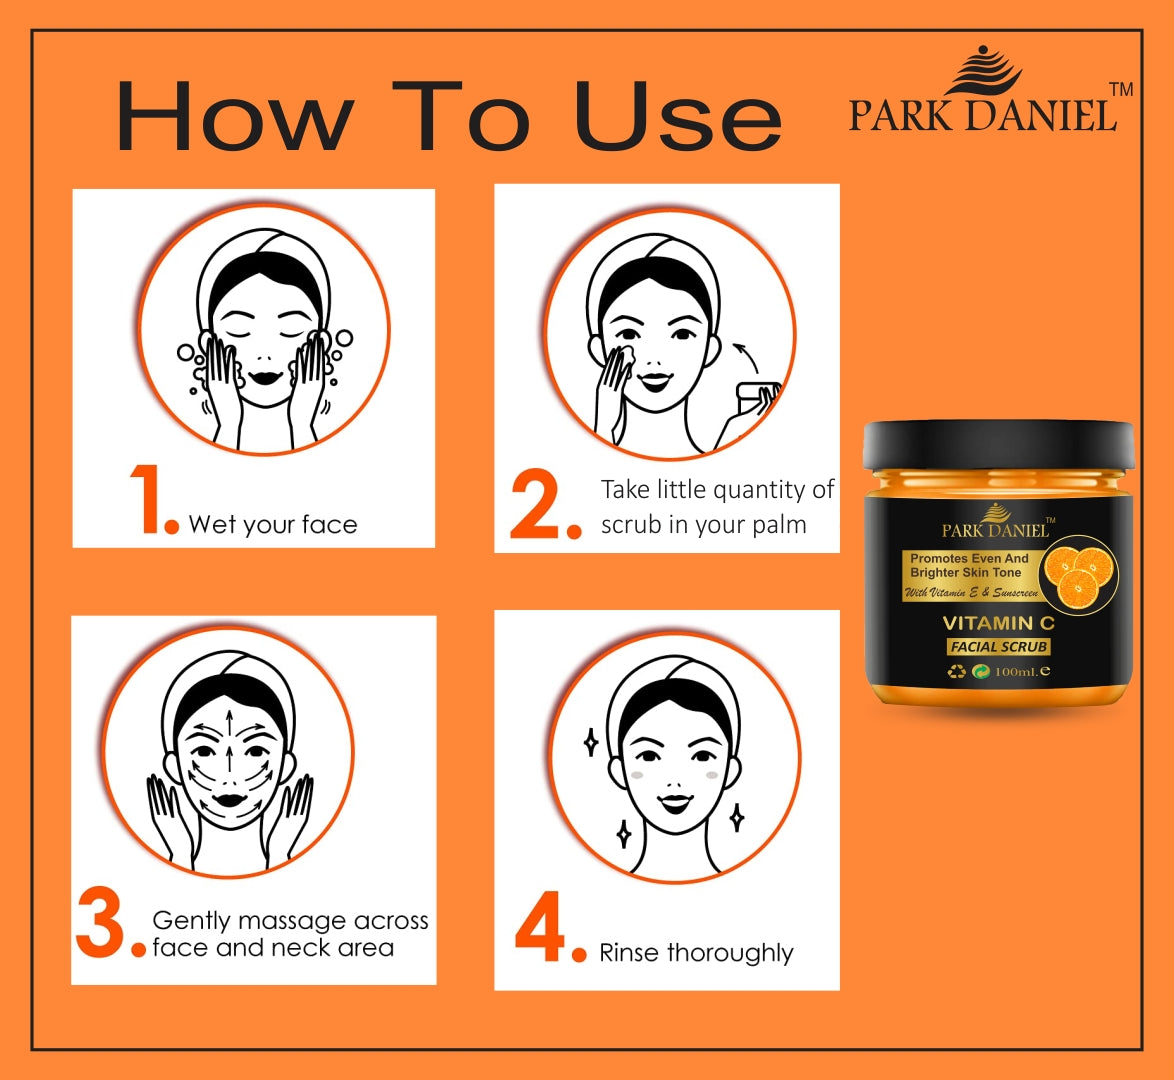 Park Daniel Vitamin C Scrub and Argan Face Wash For Anti Blemishes & Glowing Facial Kit Detoxify Rejuvenate your skin Combo Pack of 2 (250 ML)